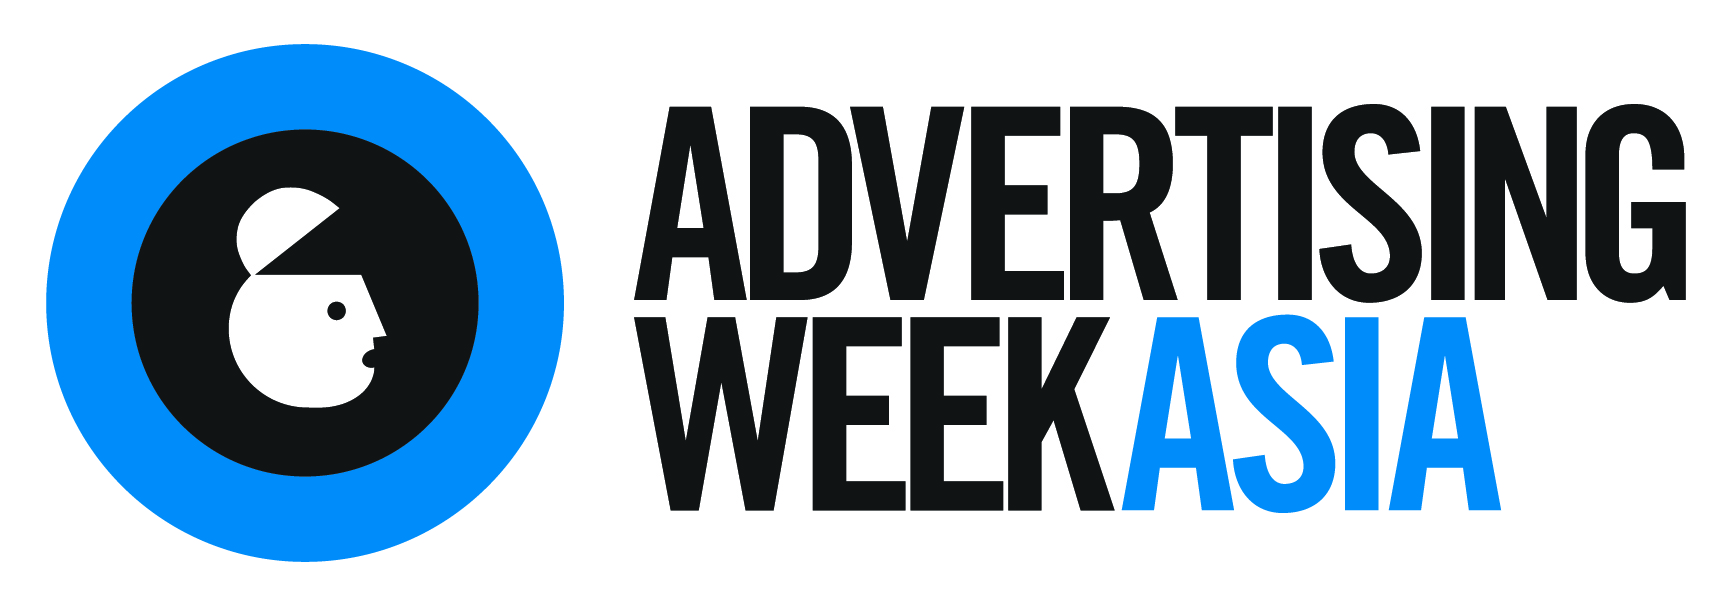 Advertising Week Asia